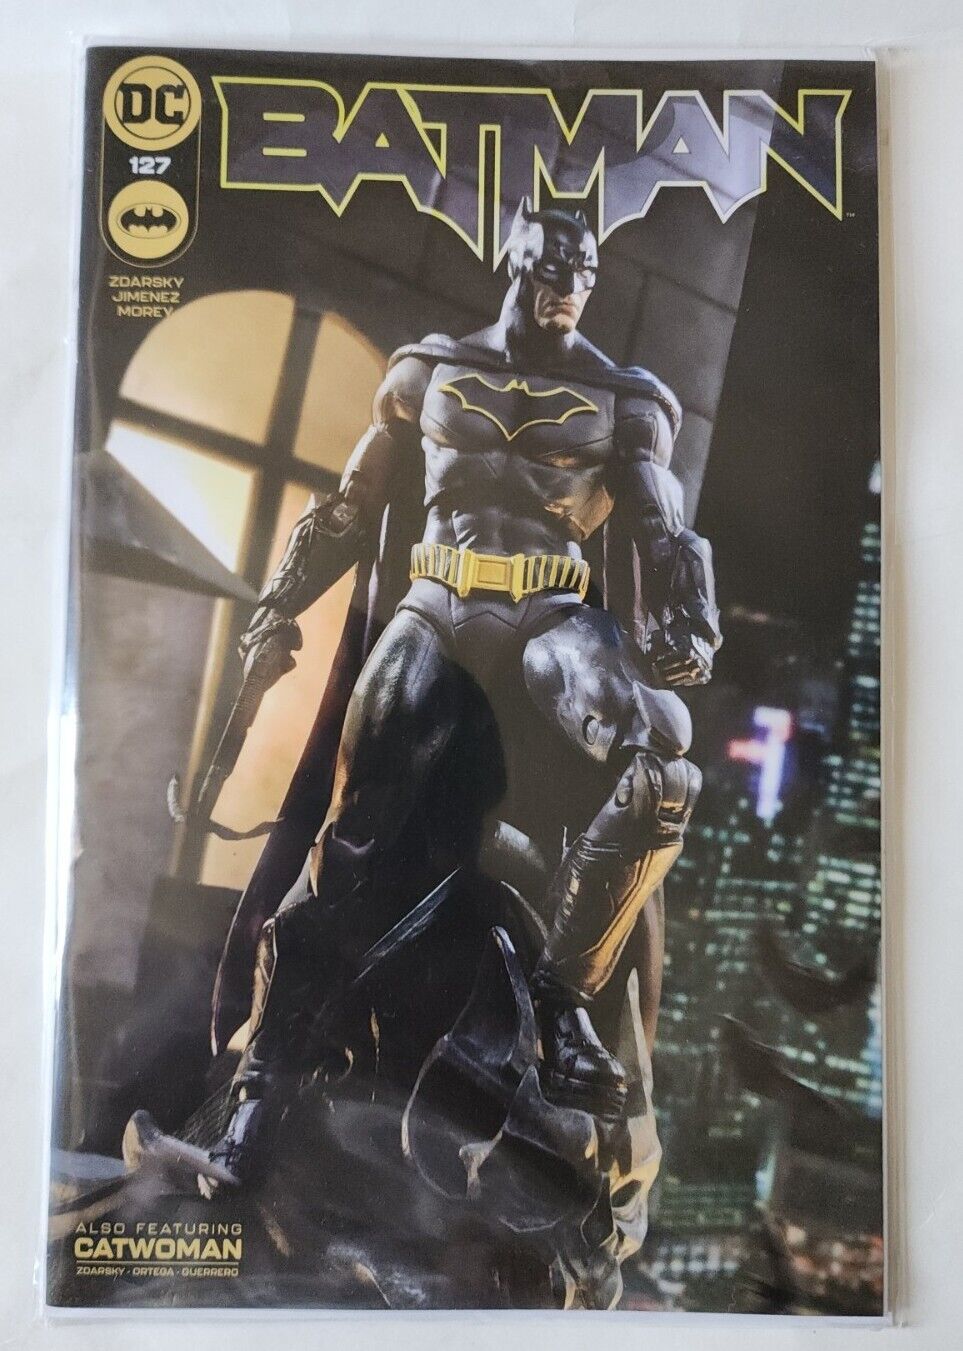 DC UNIVERSE Todd McFarlane Exclusive Batman #127 Comic Book - BRAND NEW